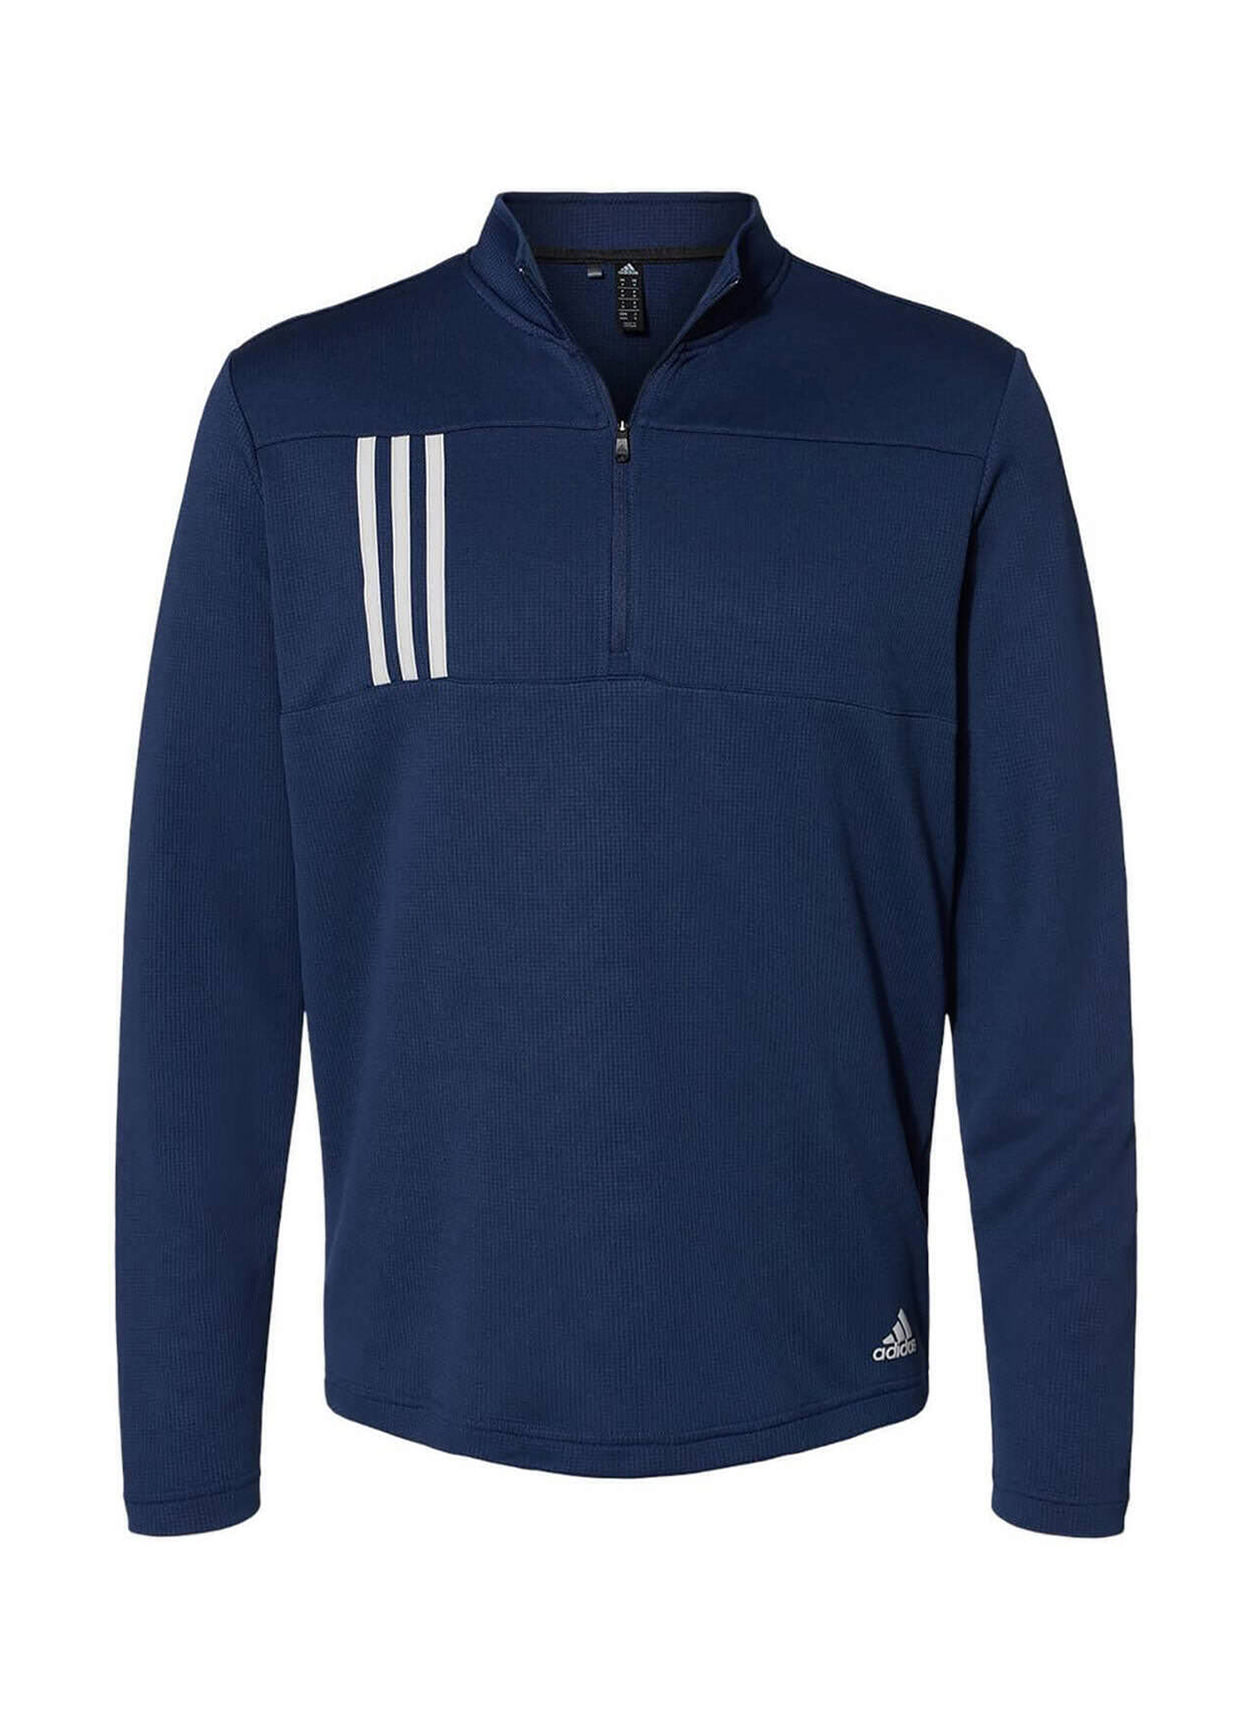 Men's Adidas 3-Stripes Double Knit Quarter-Zip Pullover Team Navy Blue / Grey